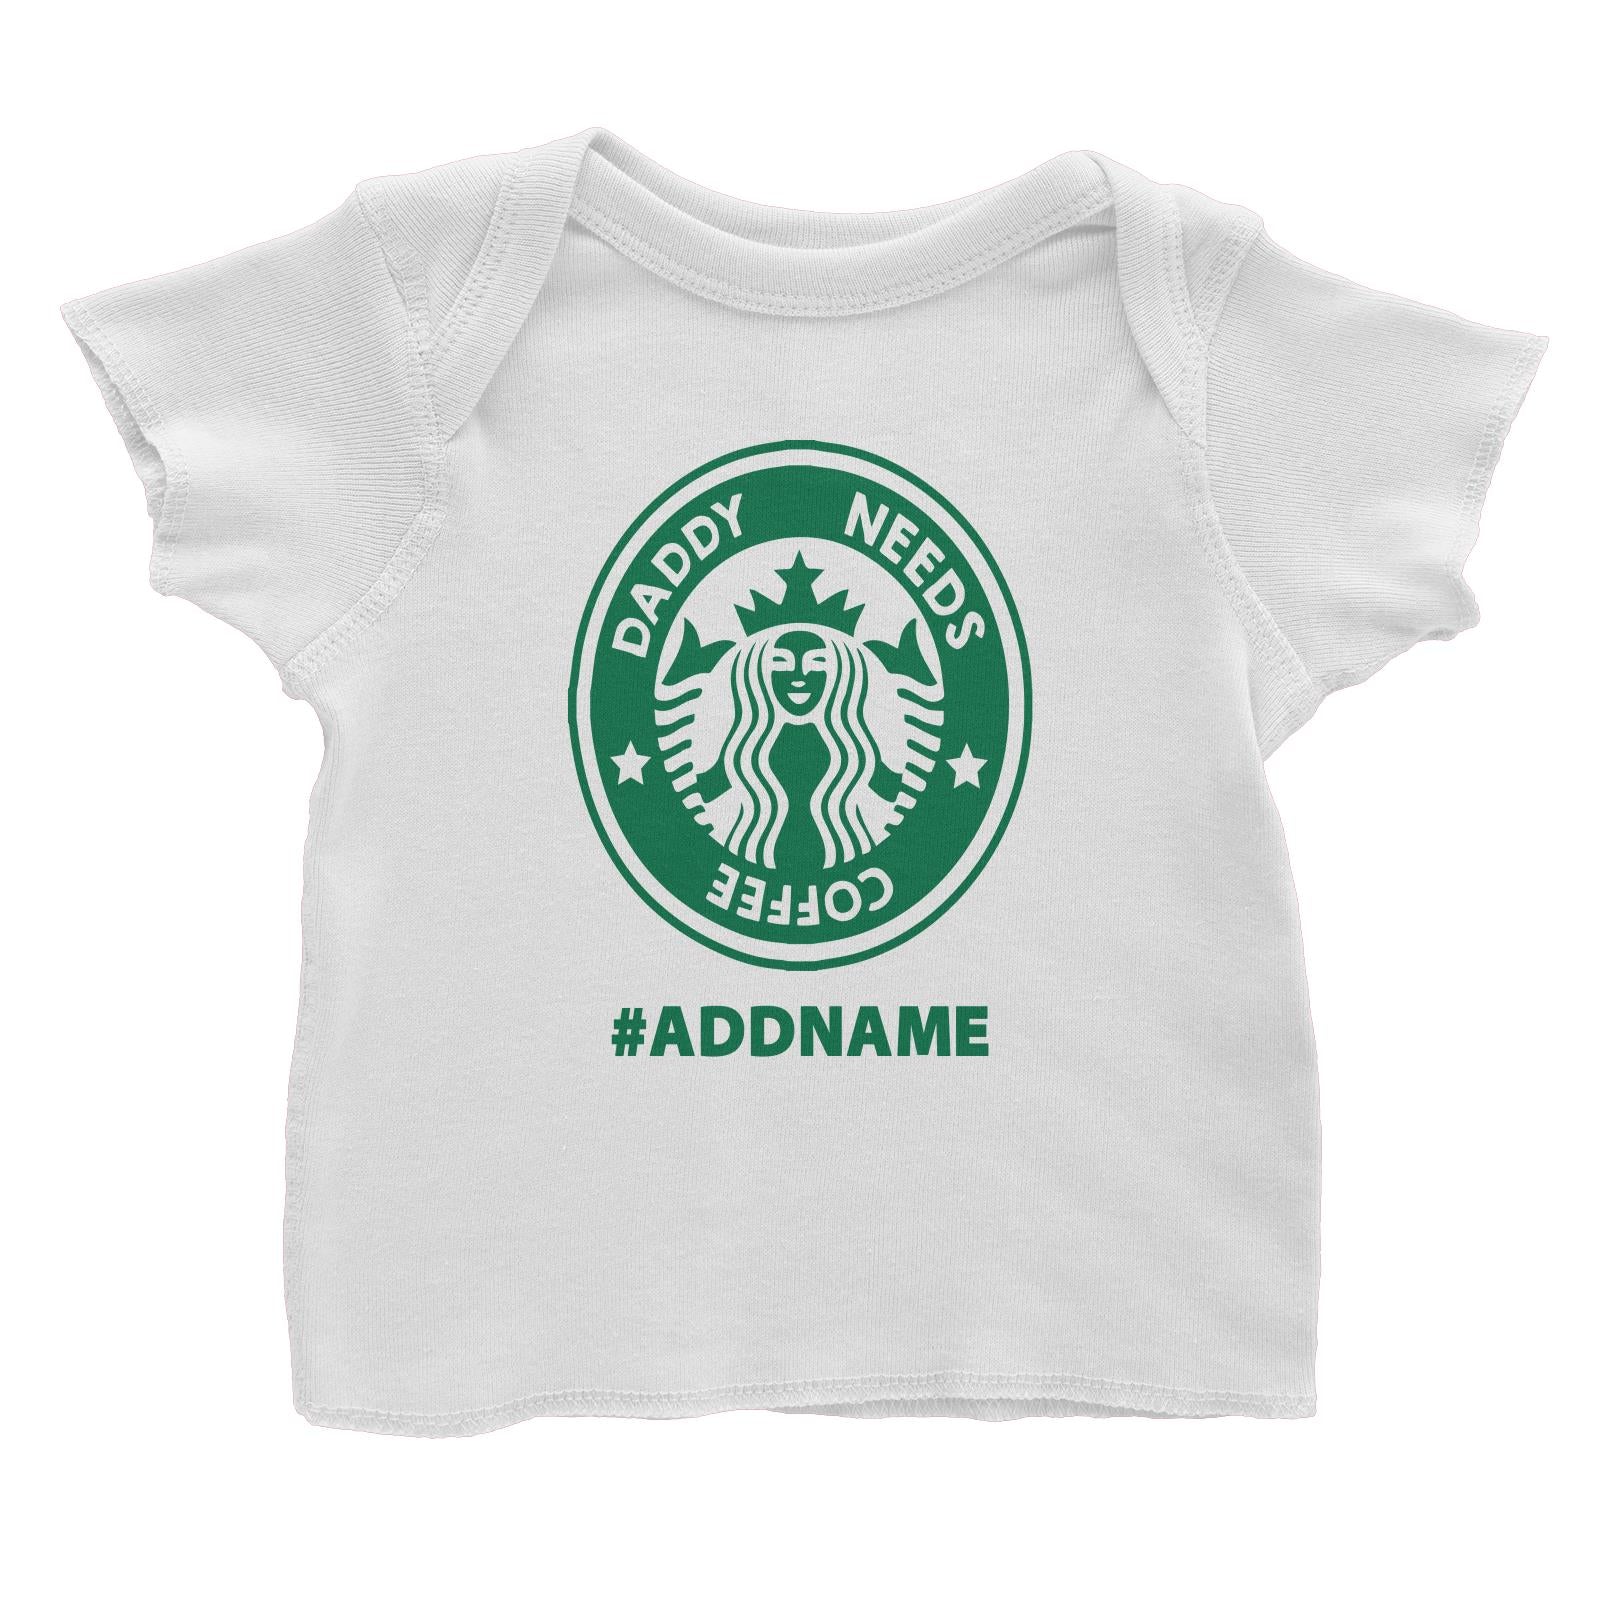 Daddy Needs Coffee White Baby T-Shirt